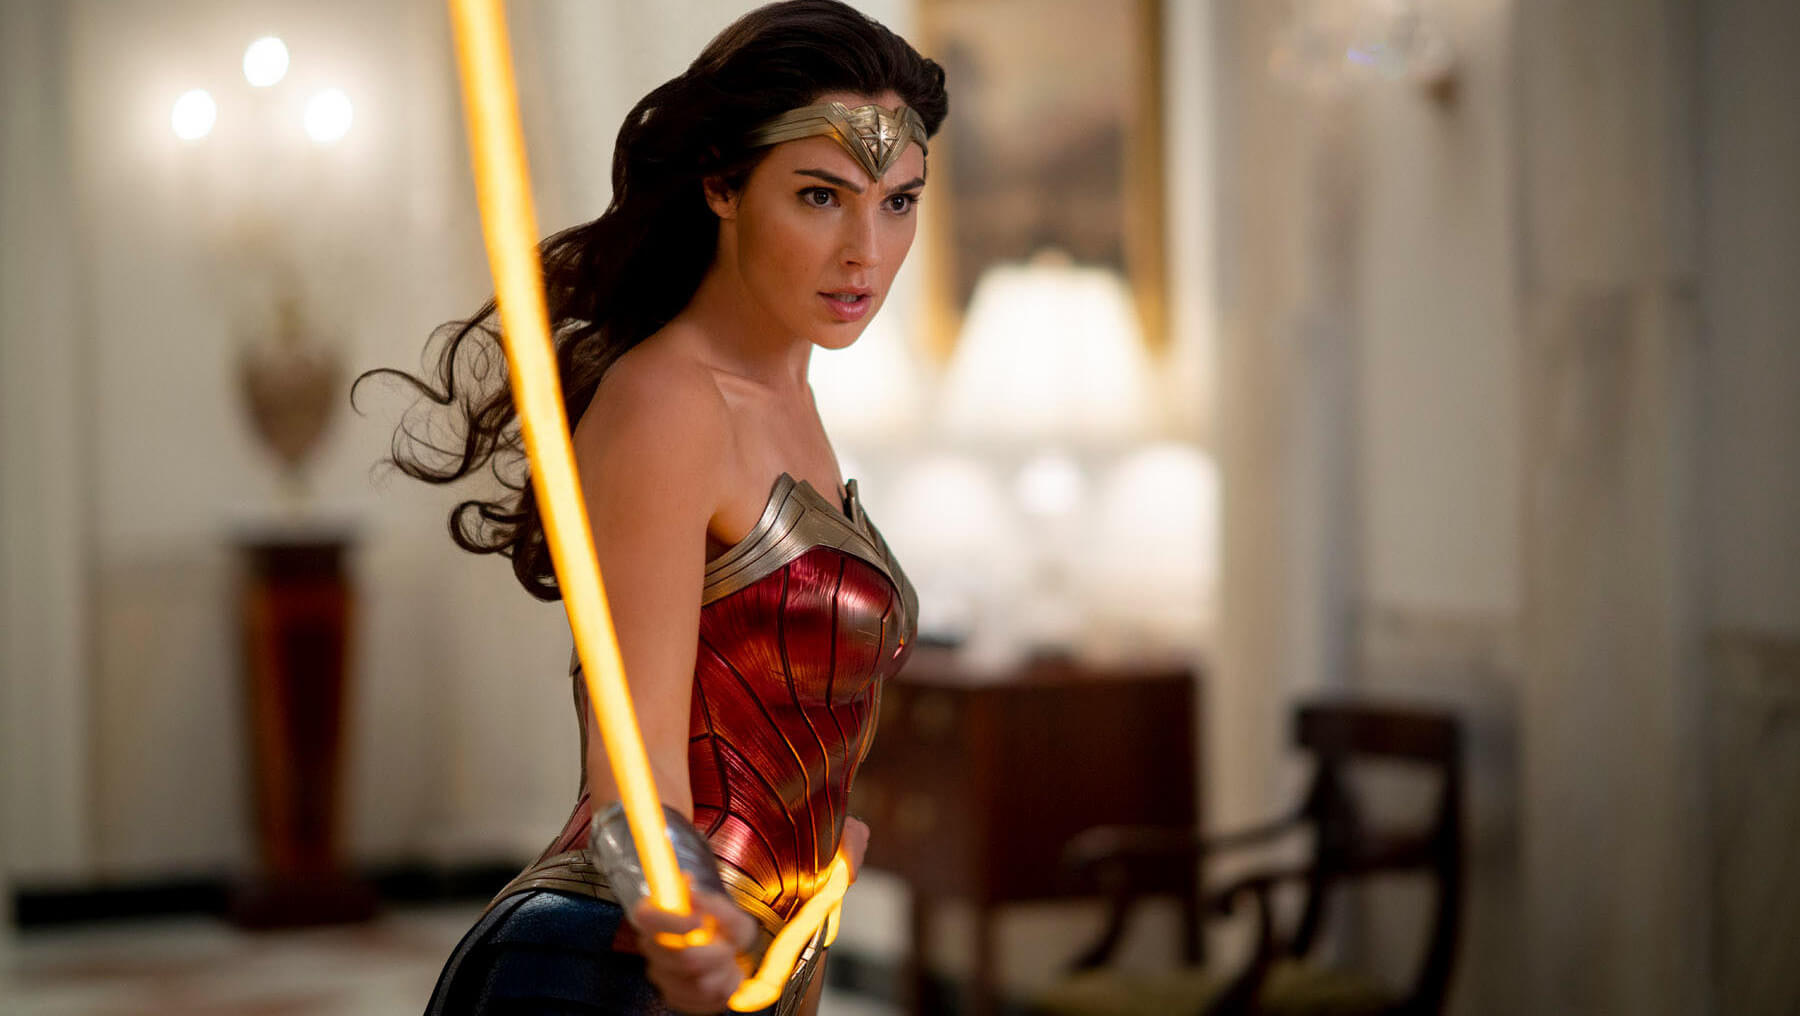 Wonder Woman 1984 reveiws and ratings